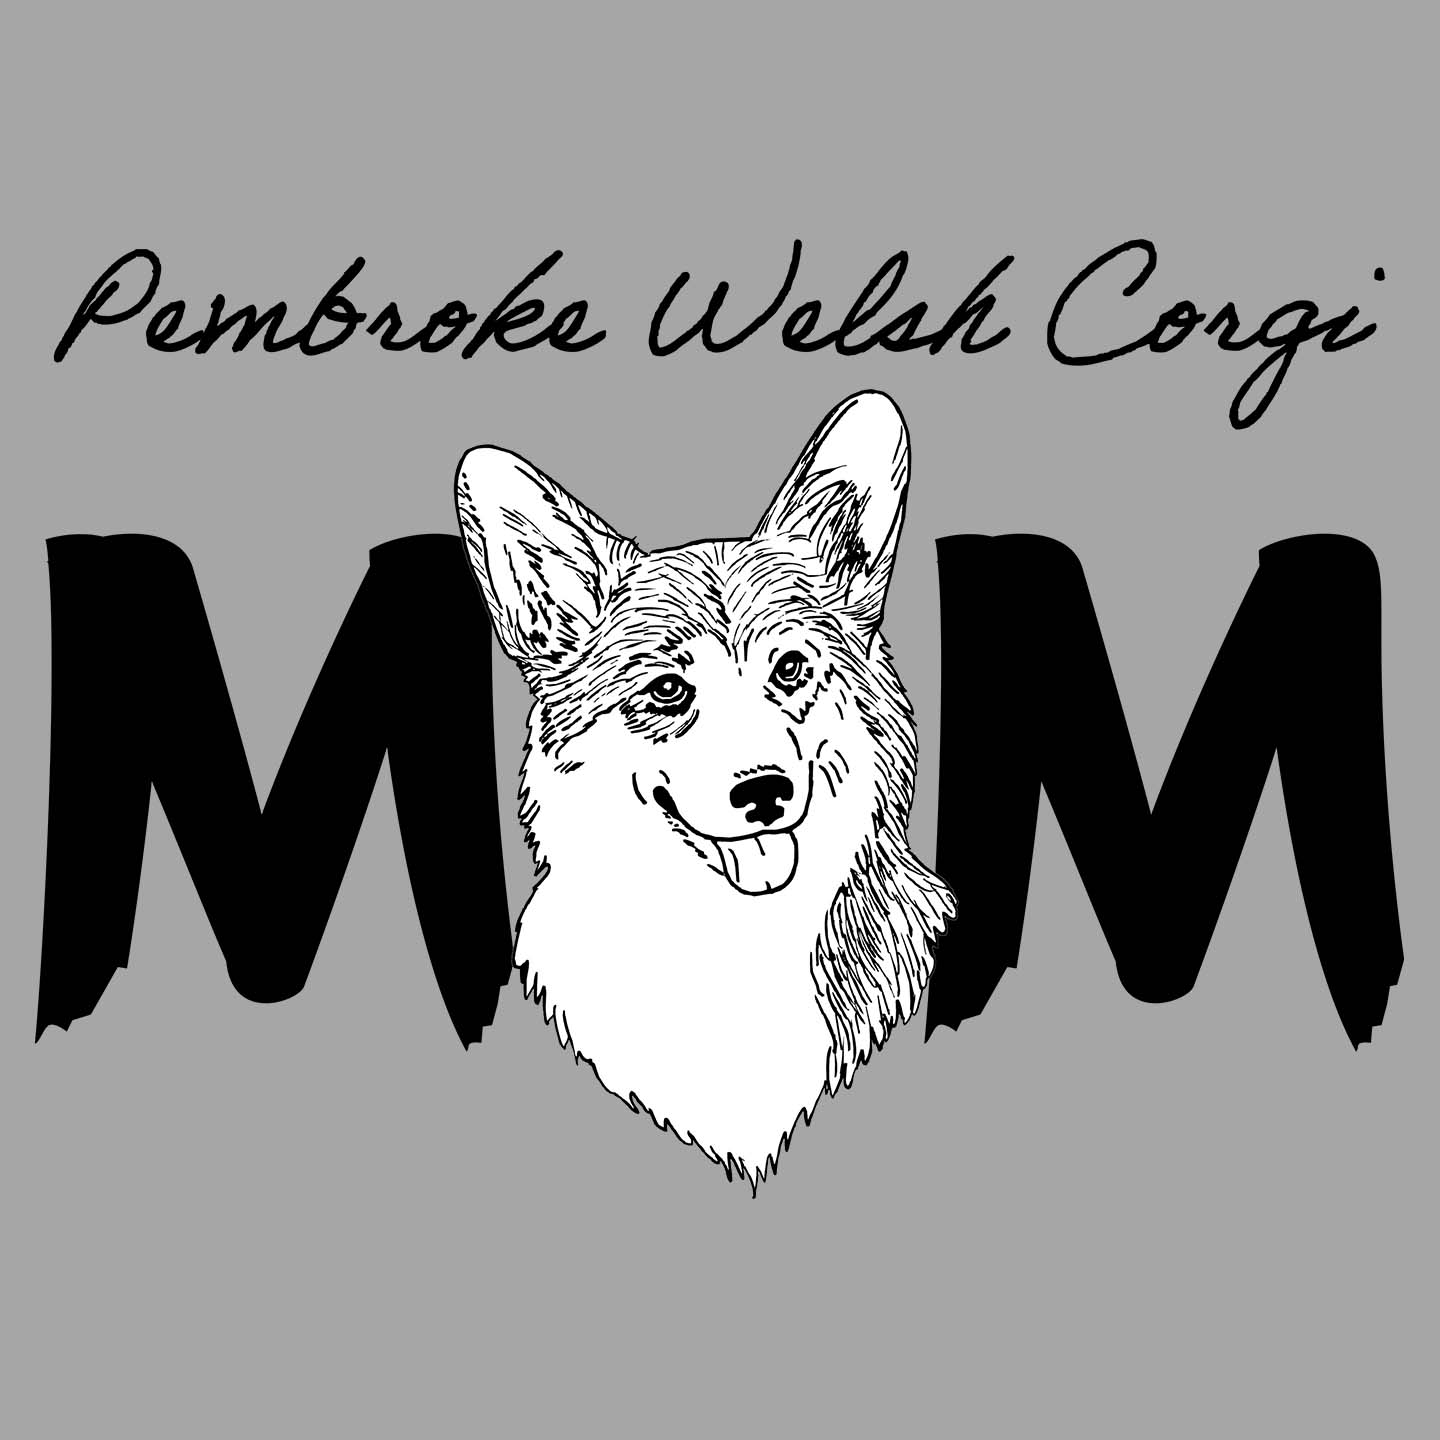 Pembroke Welsh Corgi Breed Mom - Women's V-Neck T-Shirt